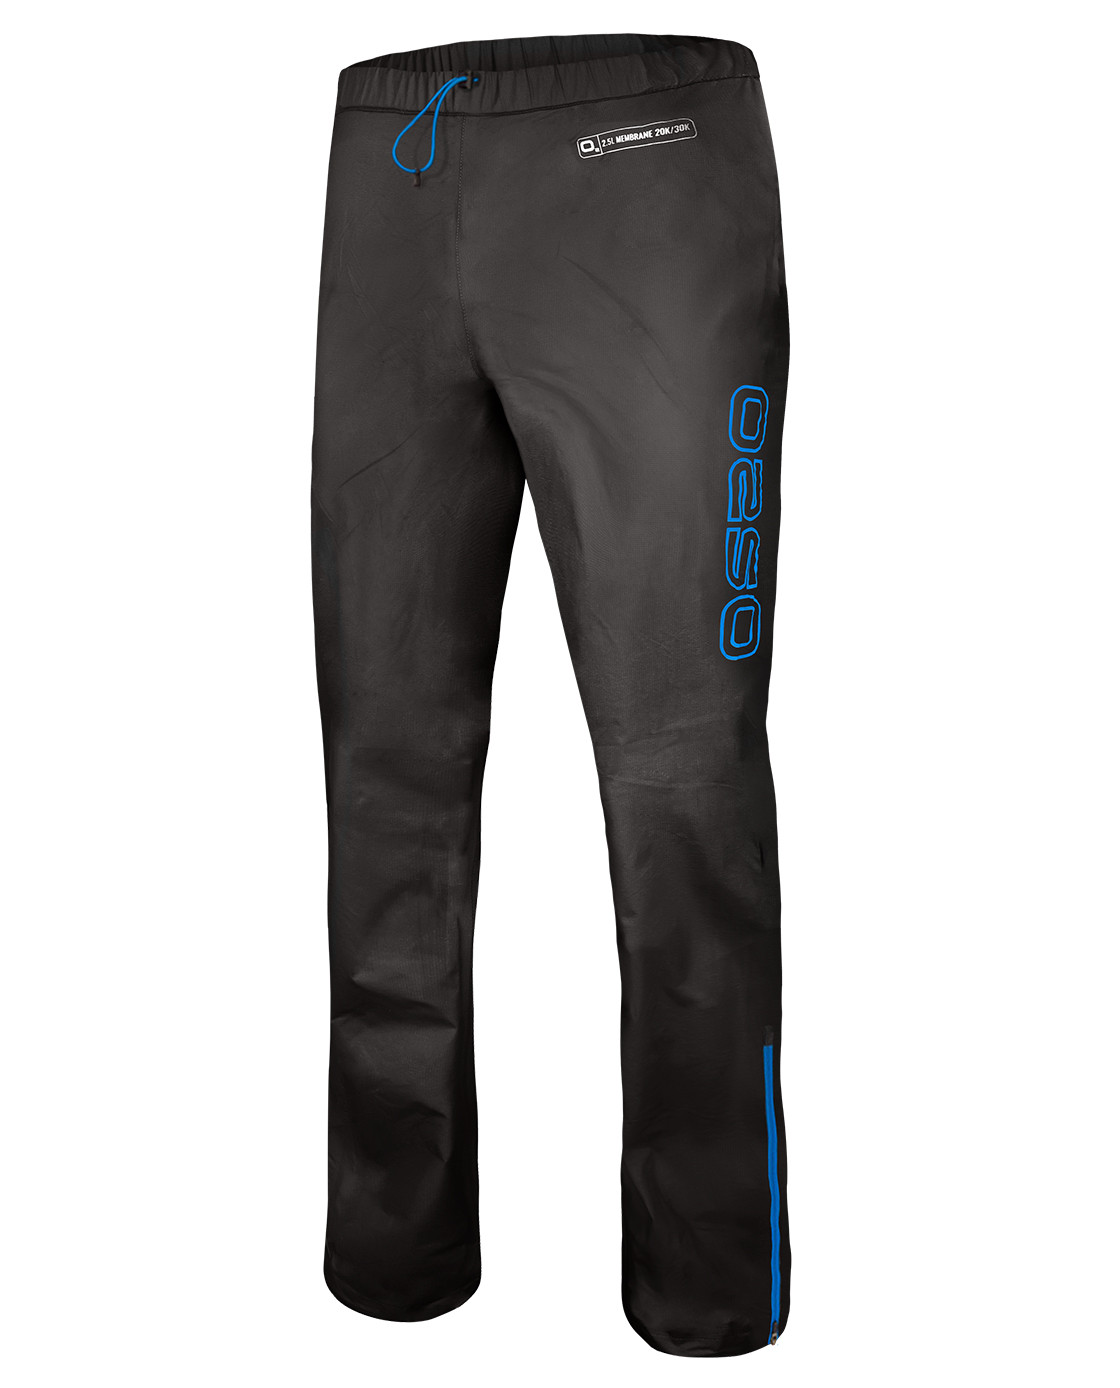 Men's Complete Breathable Waterproof Rain Pants with 1/2 Zip Legs